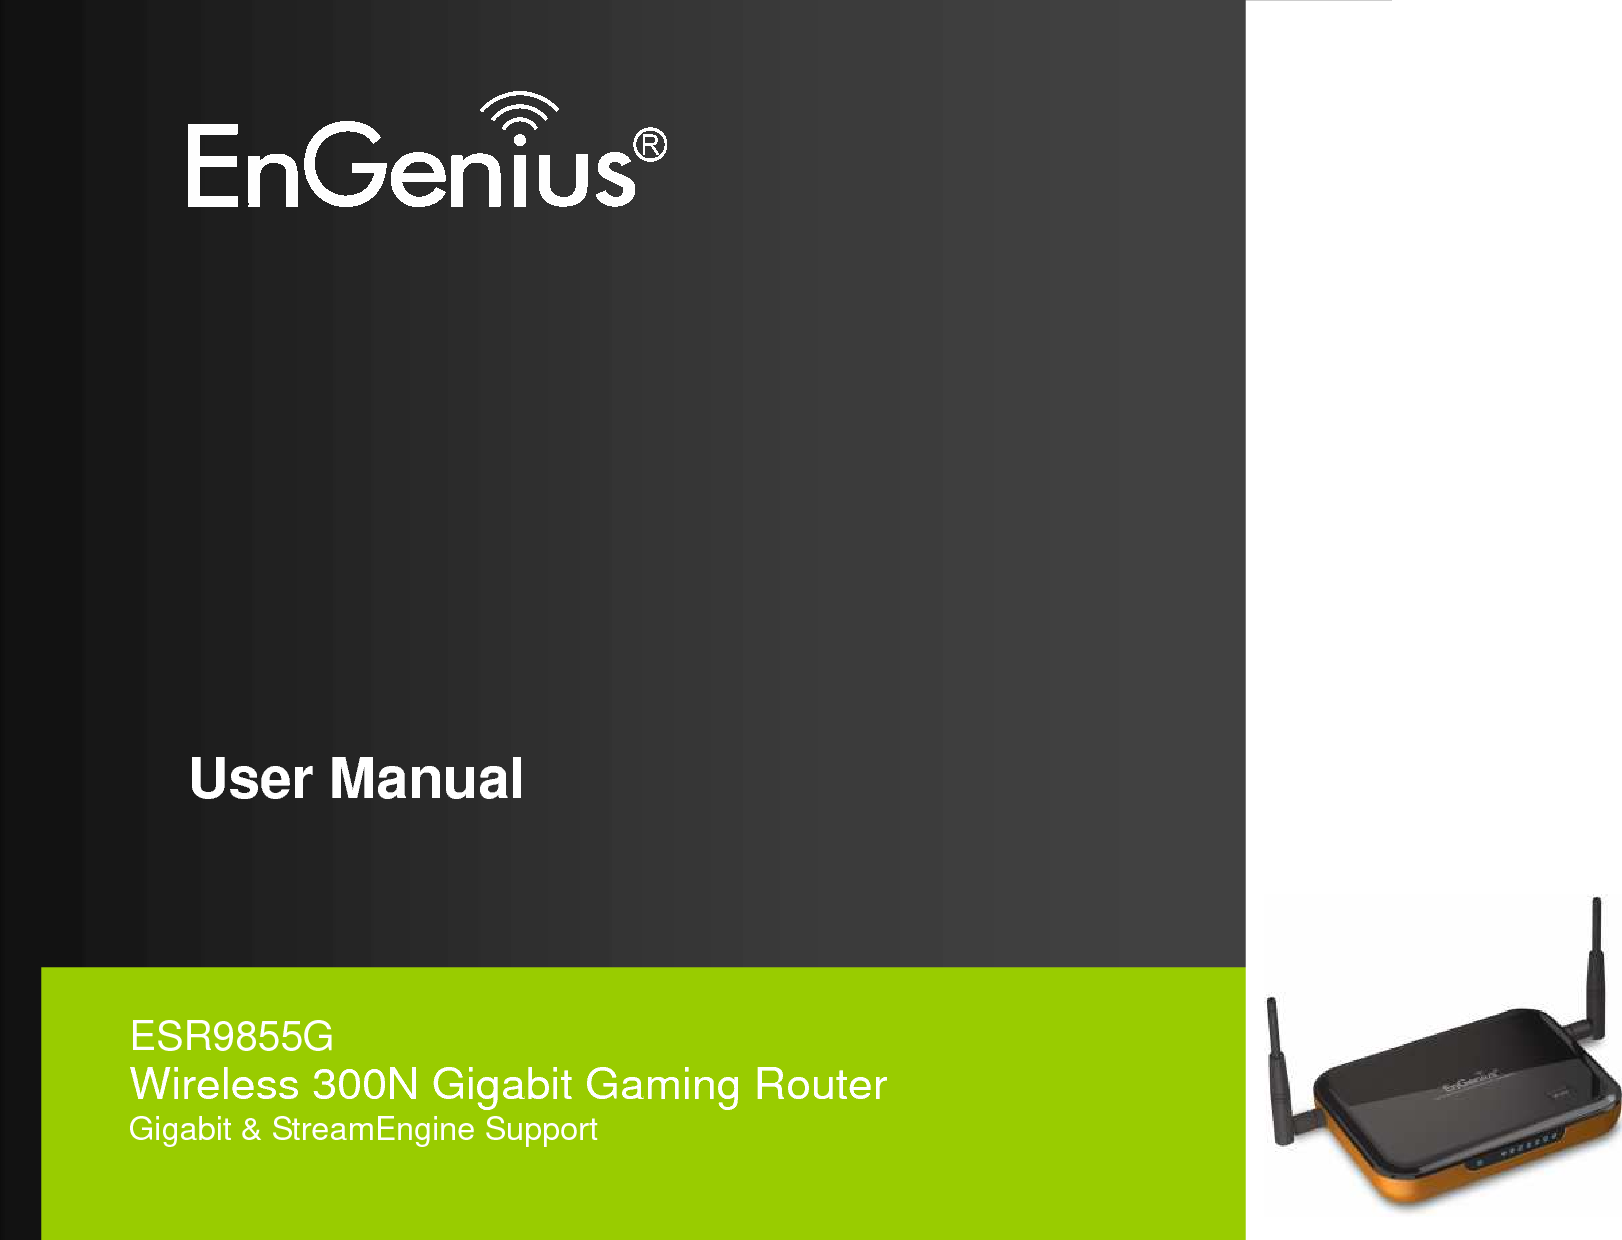          User Manual          ESR9855G Wireless 300N Gigabit Gaming Router Gigabit &amp; StreamEngine Support   